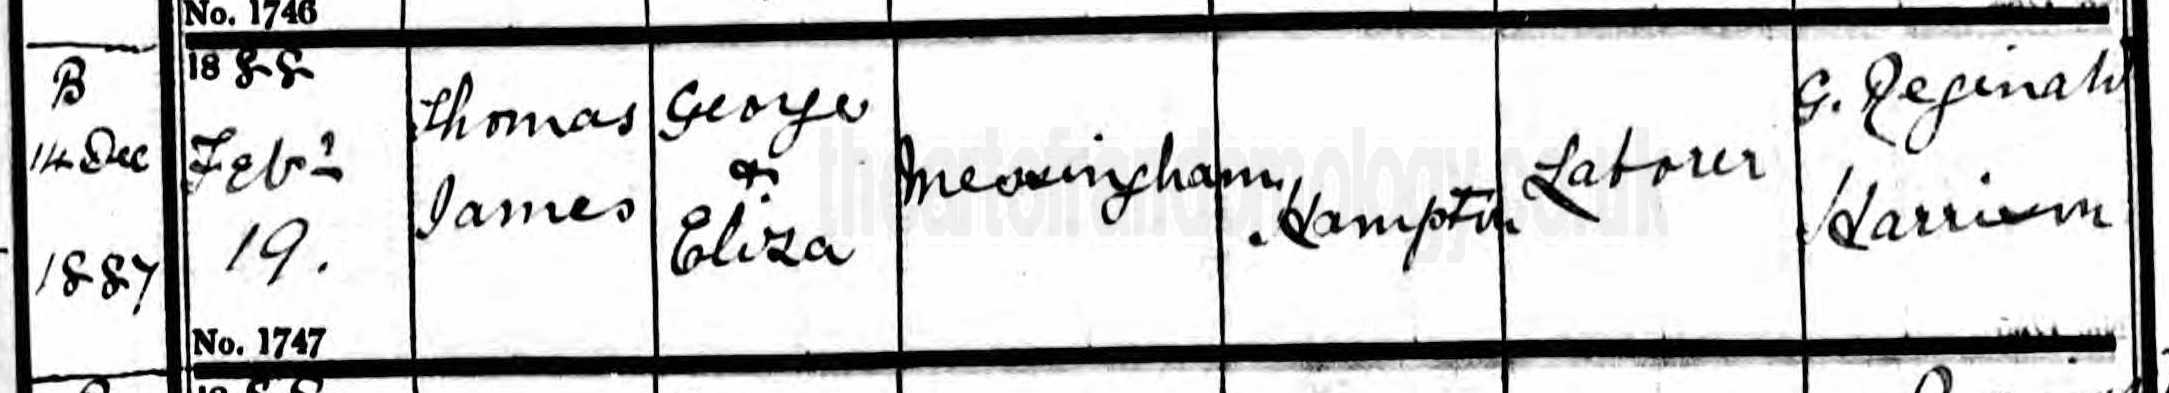 Thomas James Messingham baptism 1888